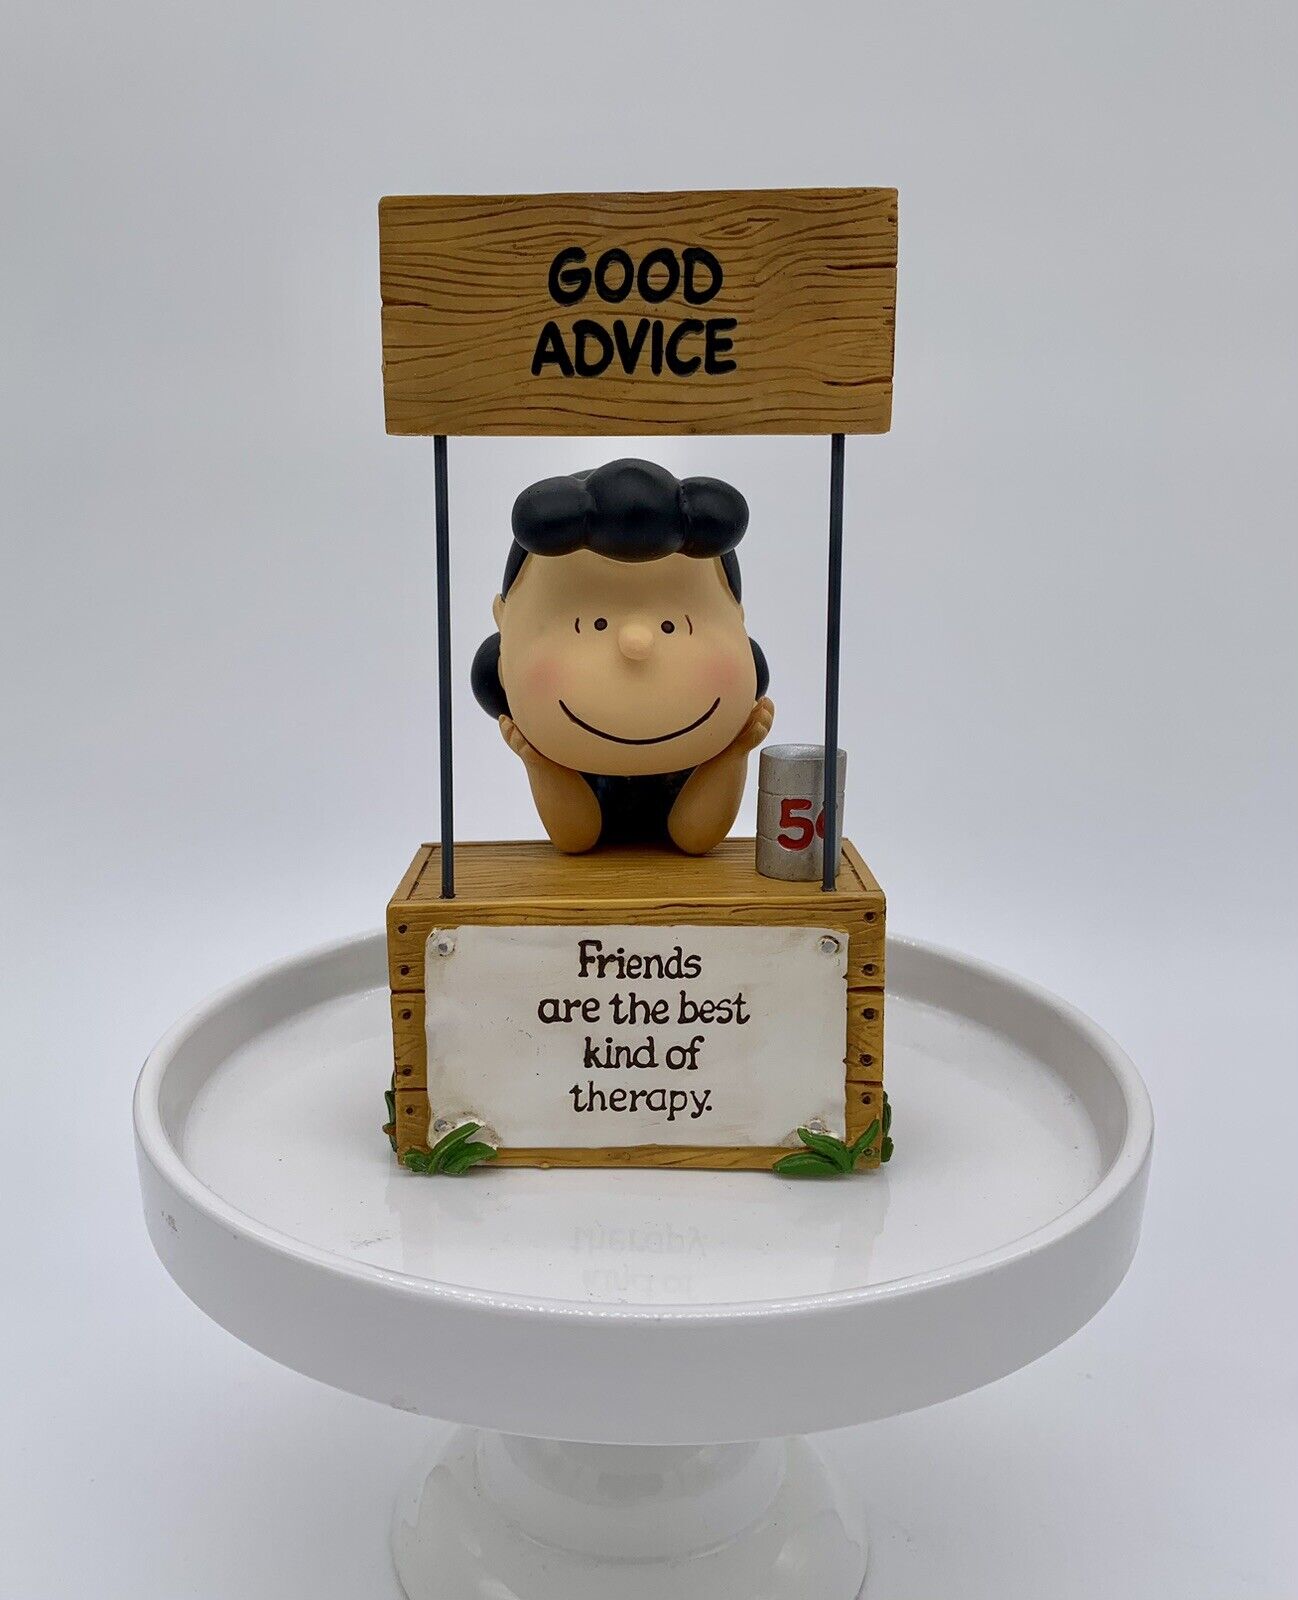 Hallmark 2010 Peanuts Gallery Lucy “Good Advice” Booth Resin 6” Figurine